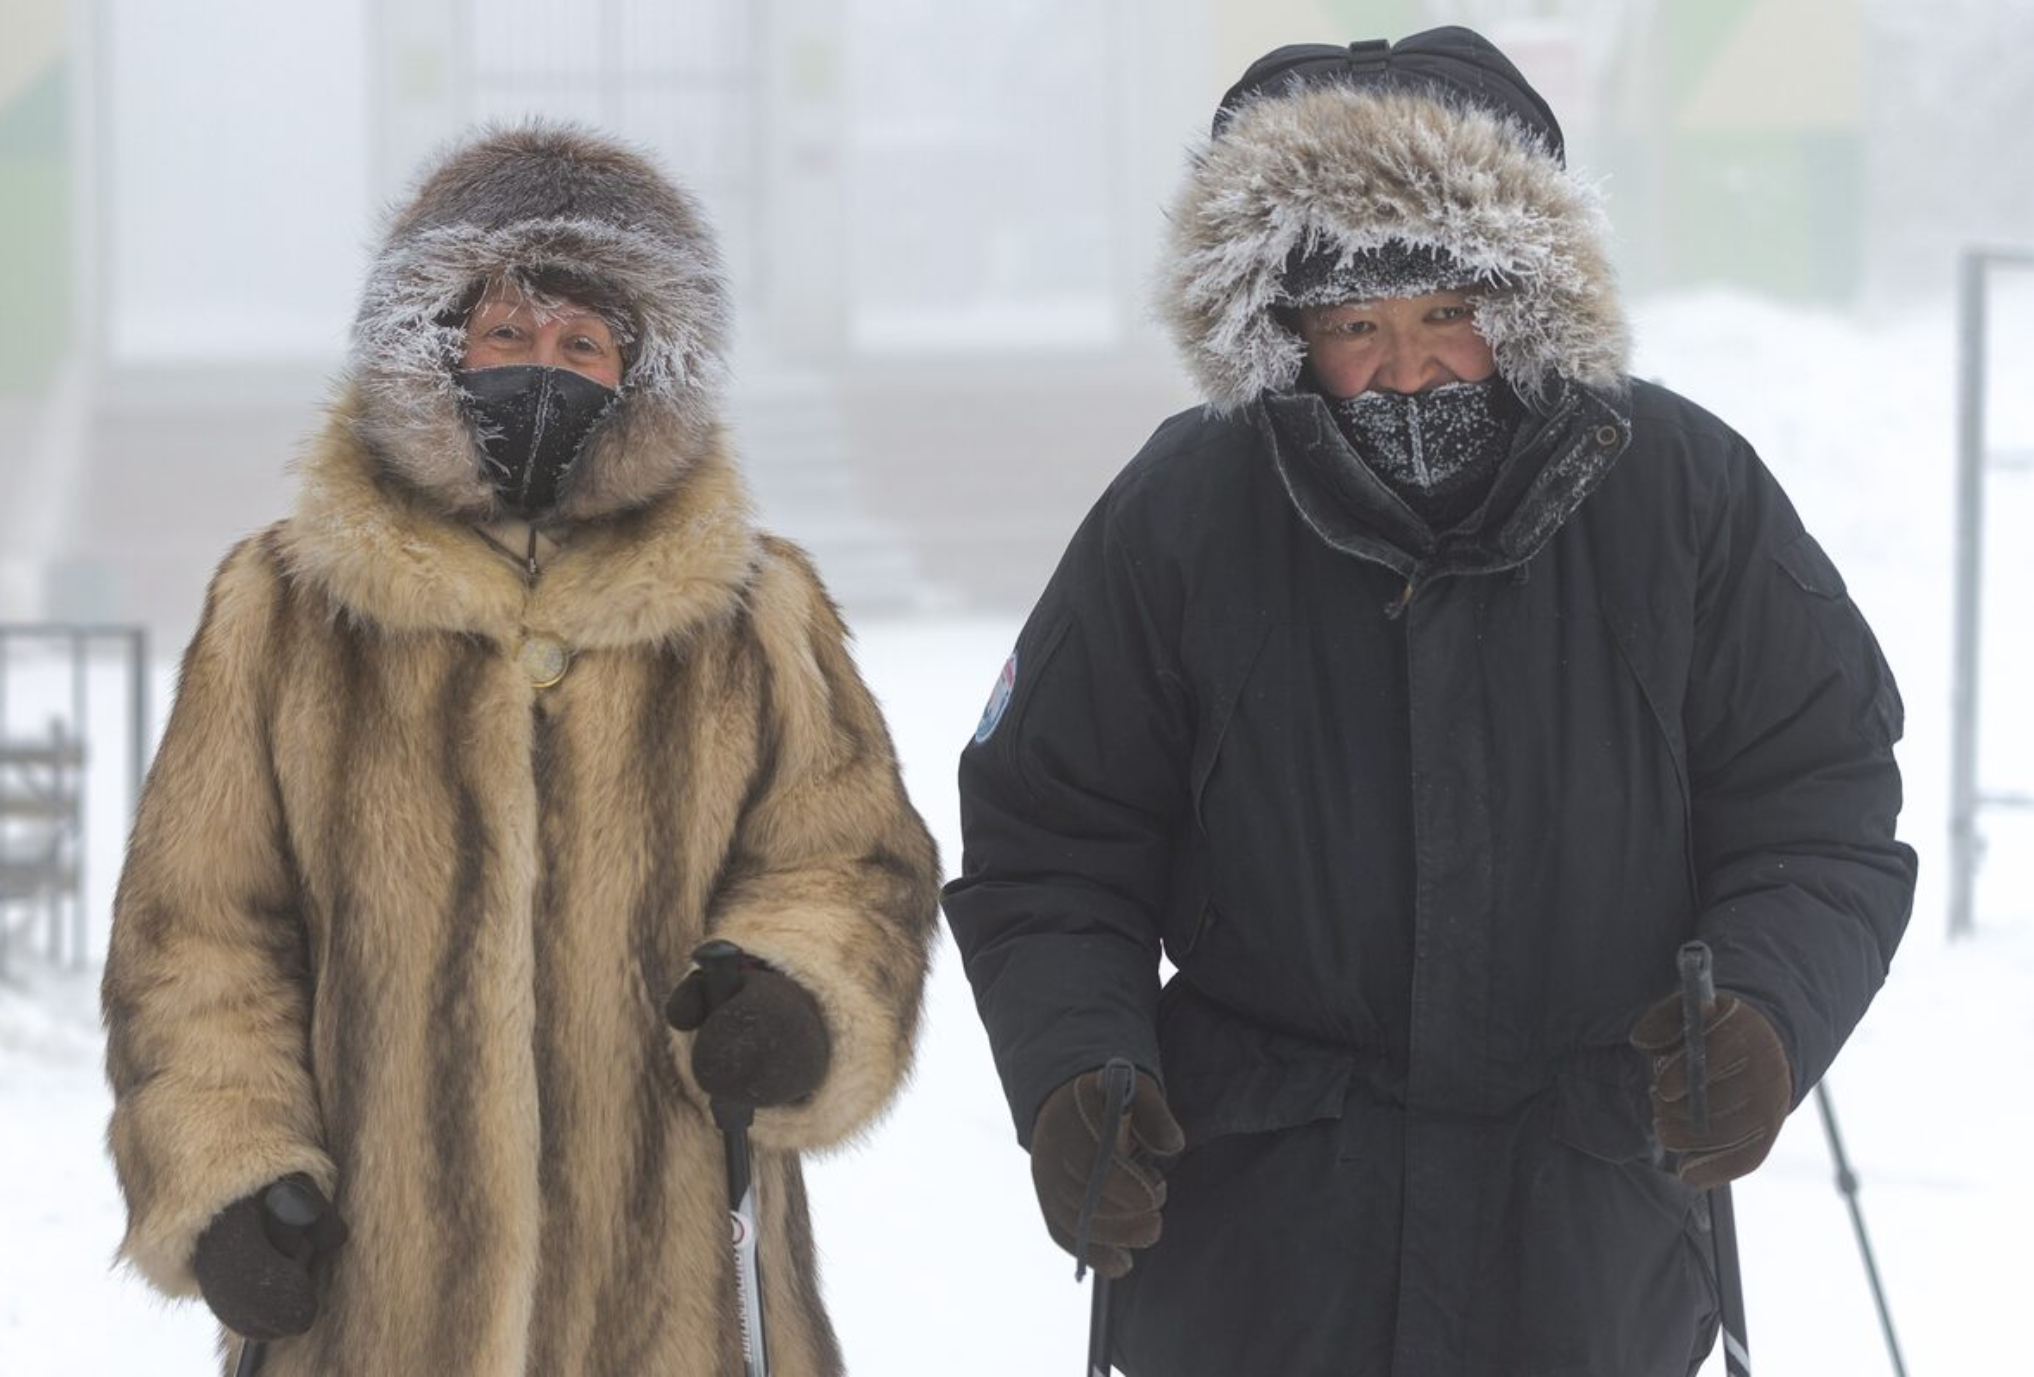 Yakutsk: Η ζωή στην πιο παγωμένη πόλη του πλανήτη με θερμοκρασίες που φτάνουν τους -56 βαθμούς Κελσίου